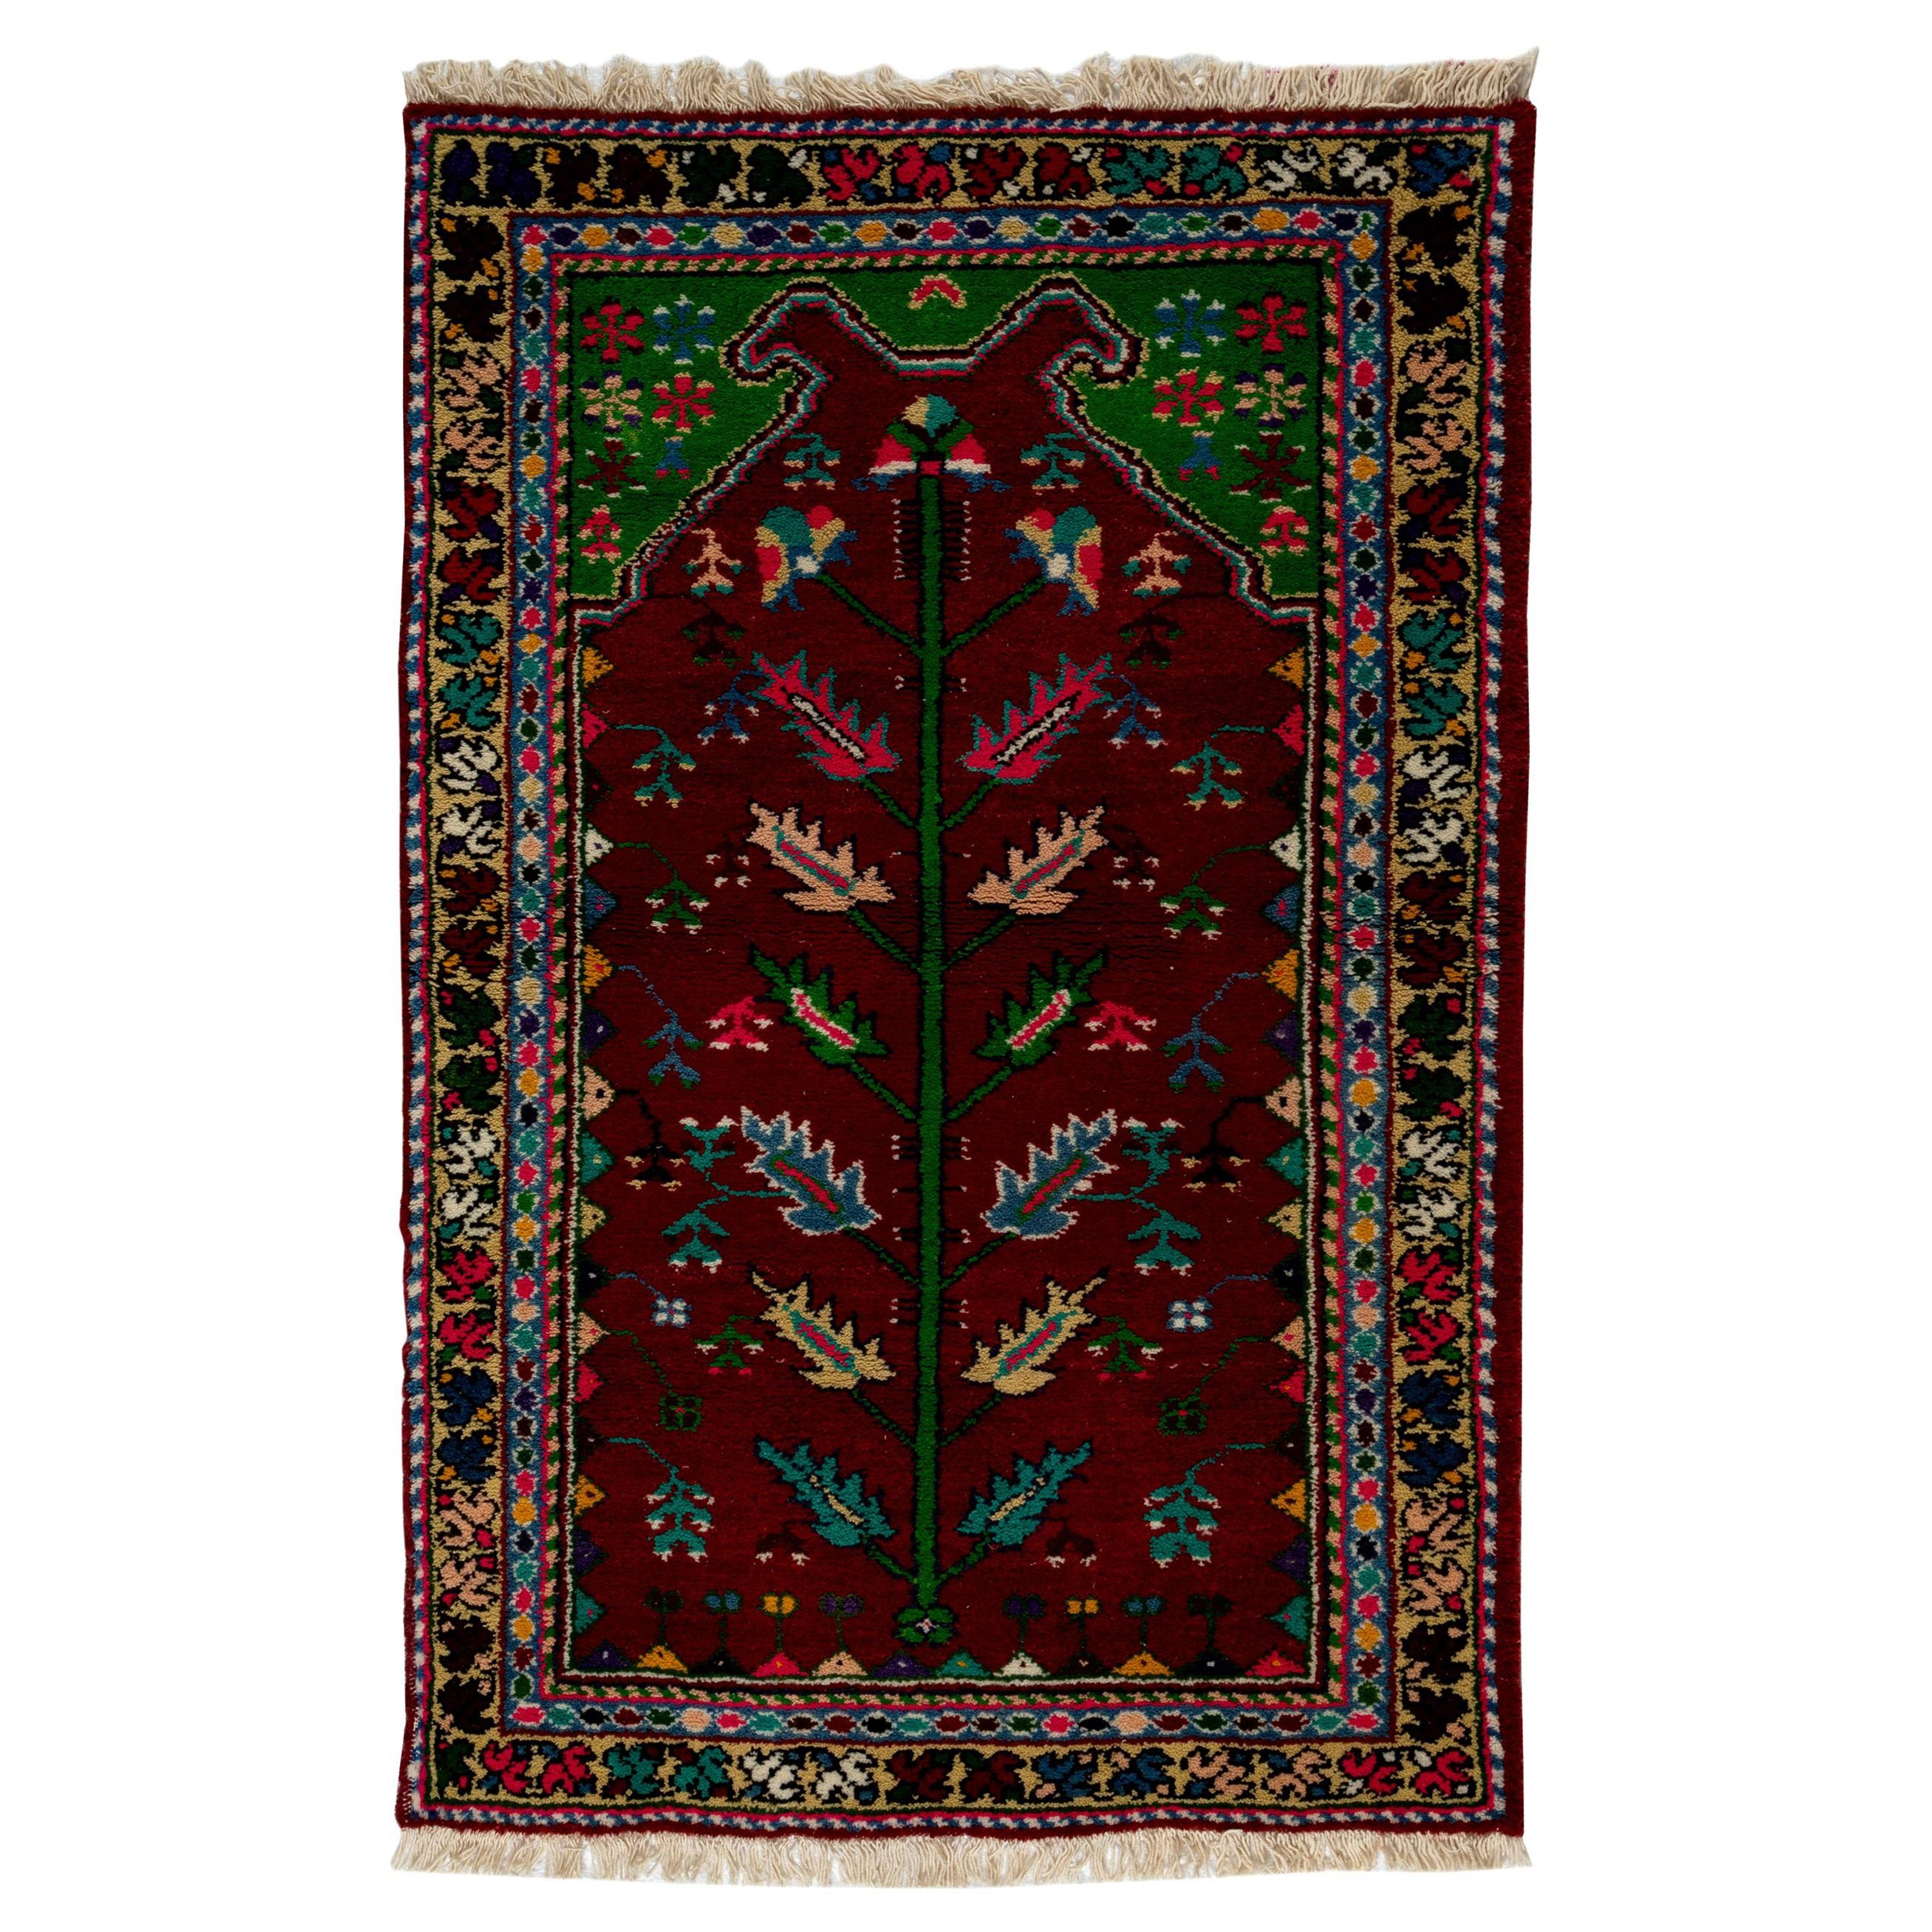 3x4.5 Ft Vintage Handmade Turkish Wool Accent Rug in Maroon, Beige, Blue & Pink For Sale